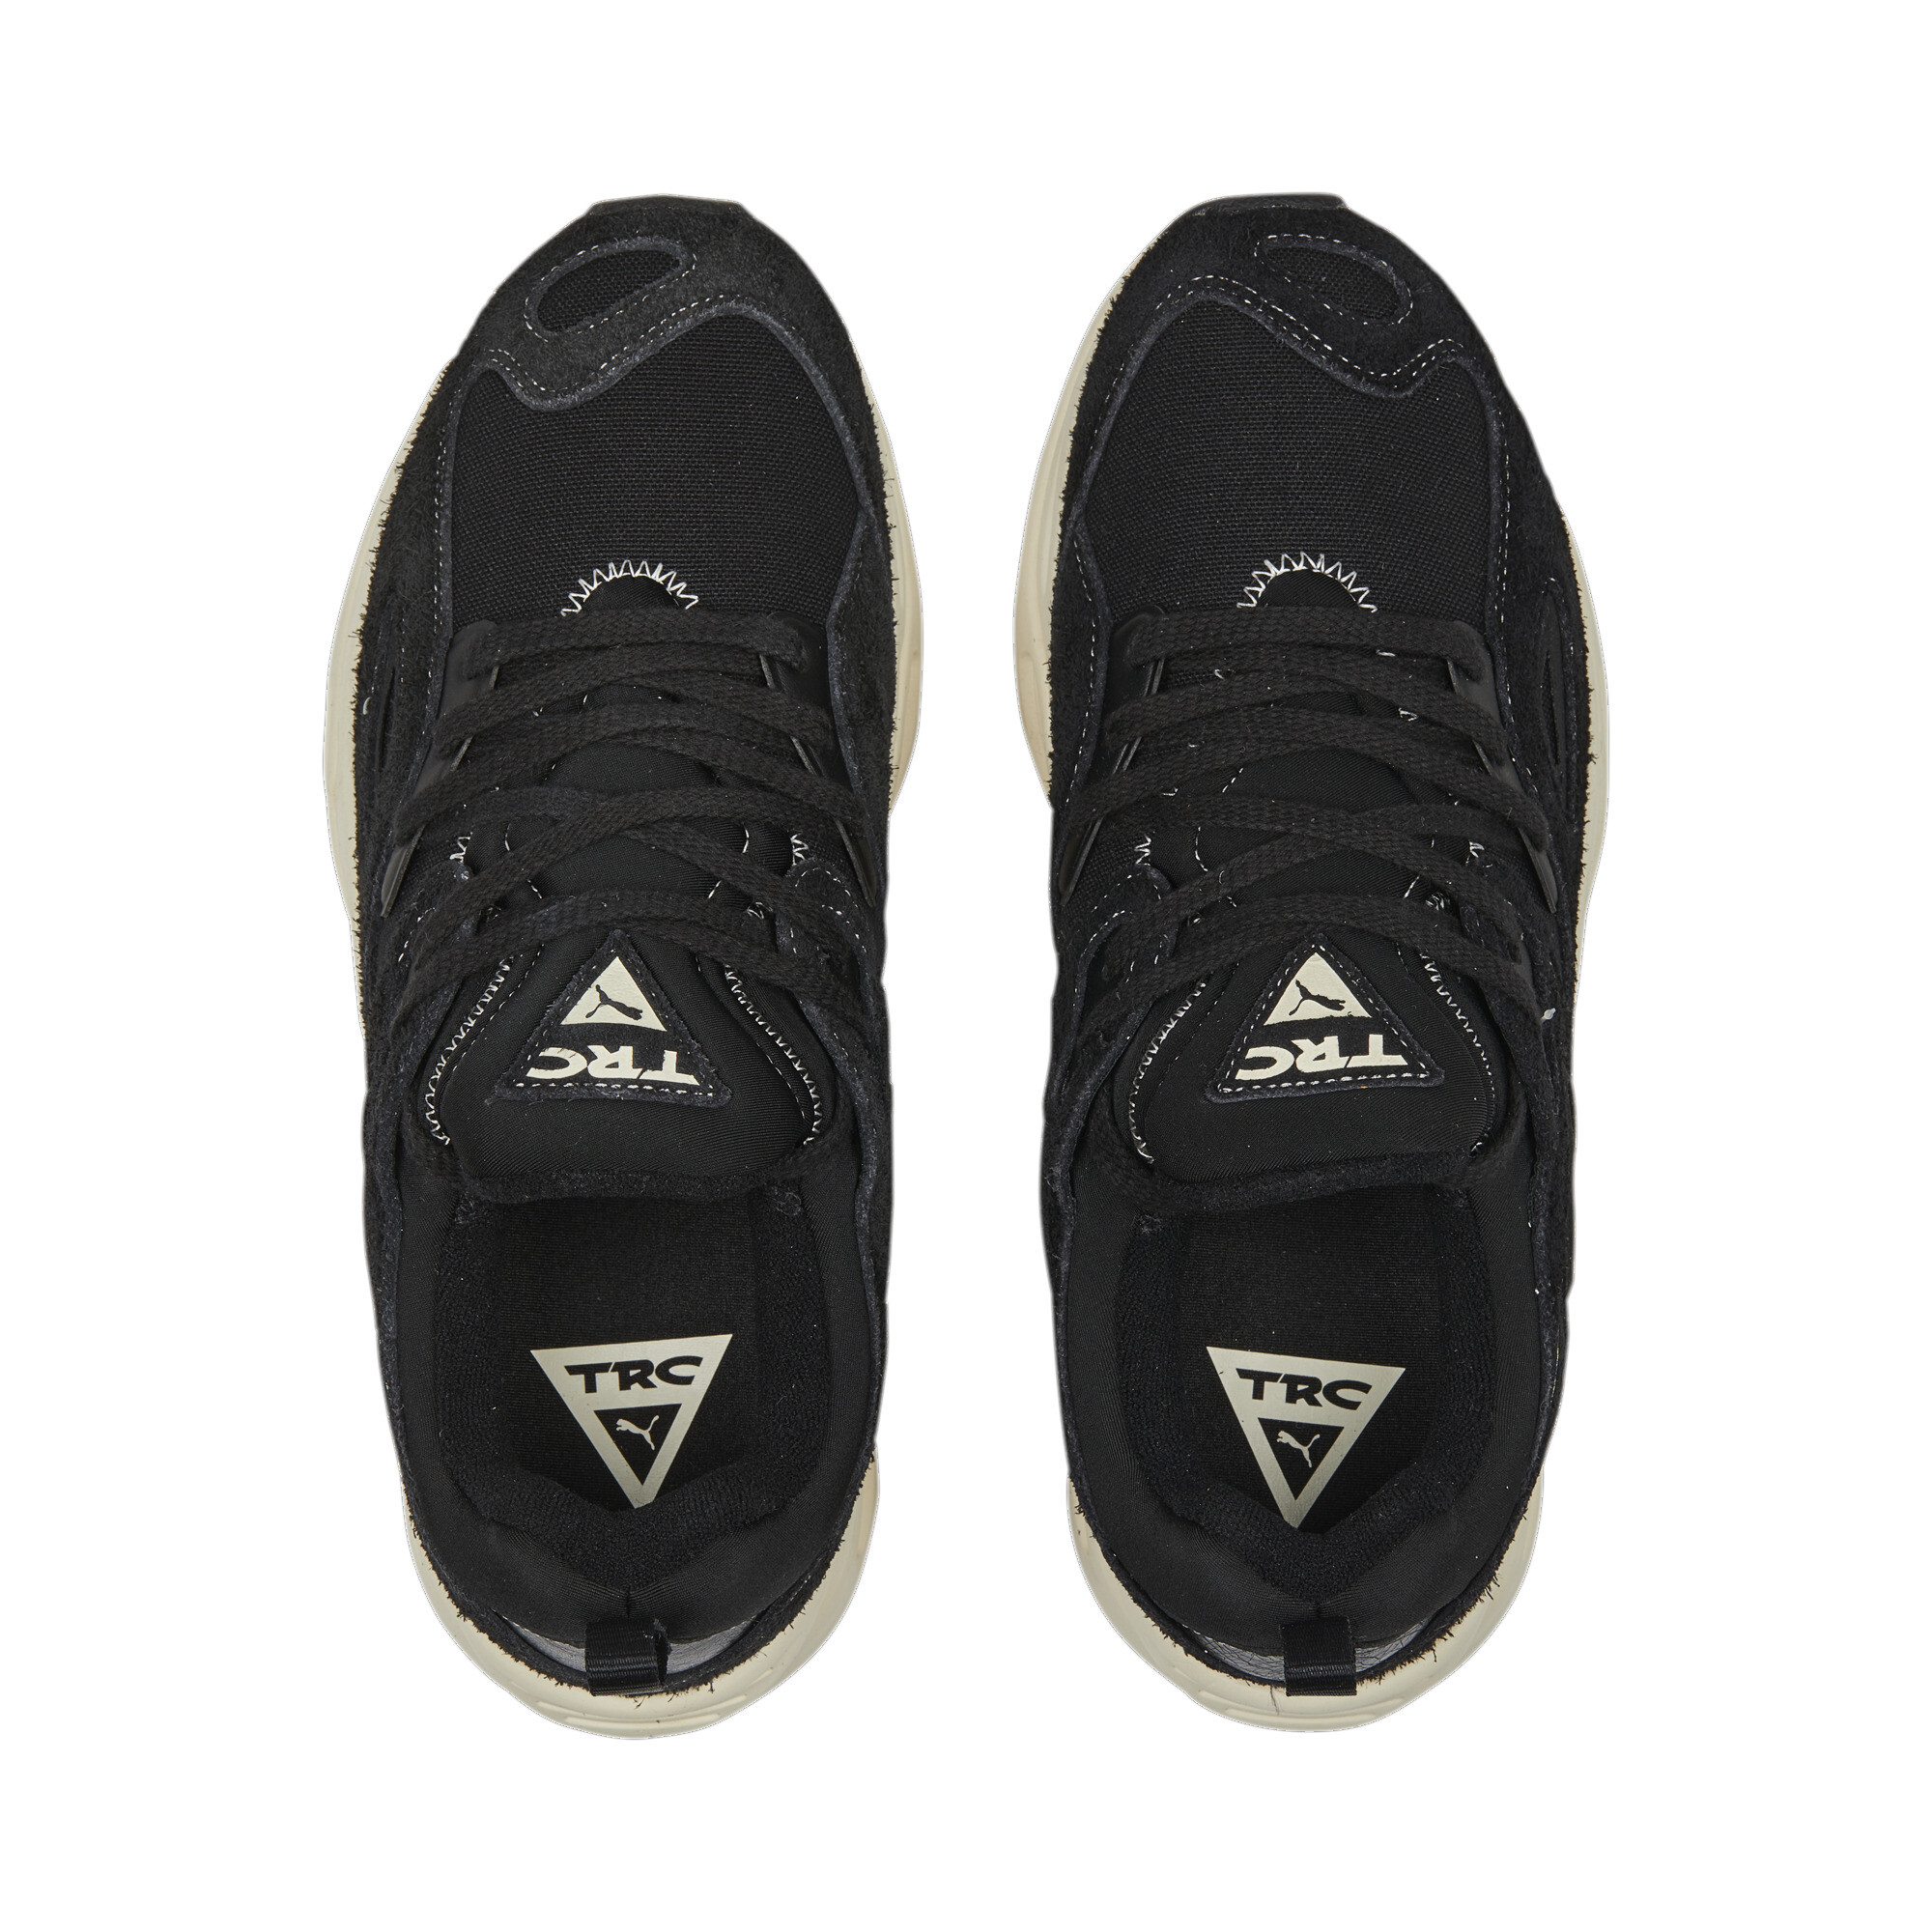 Men's PUMA TRC Blaze Worn Out Sneakers In 10 - Black, Size EU 43